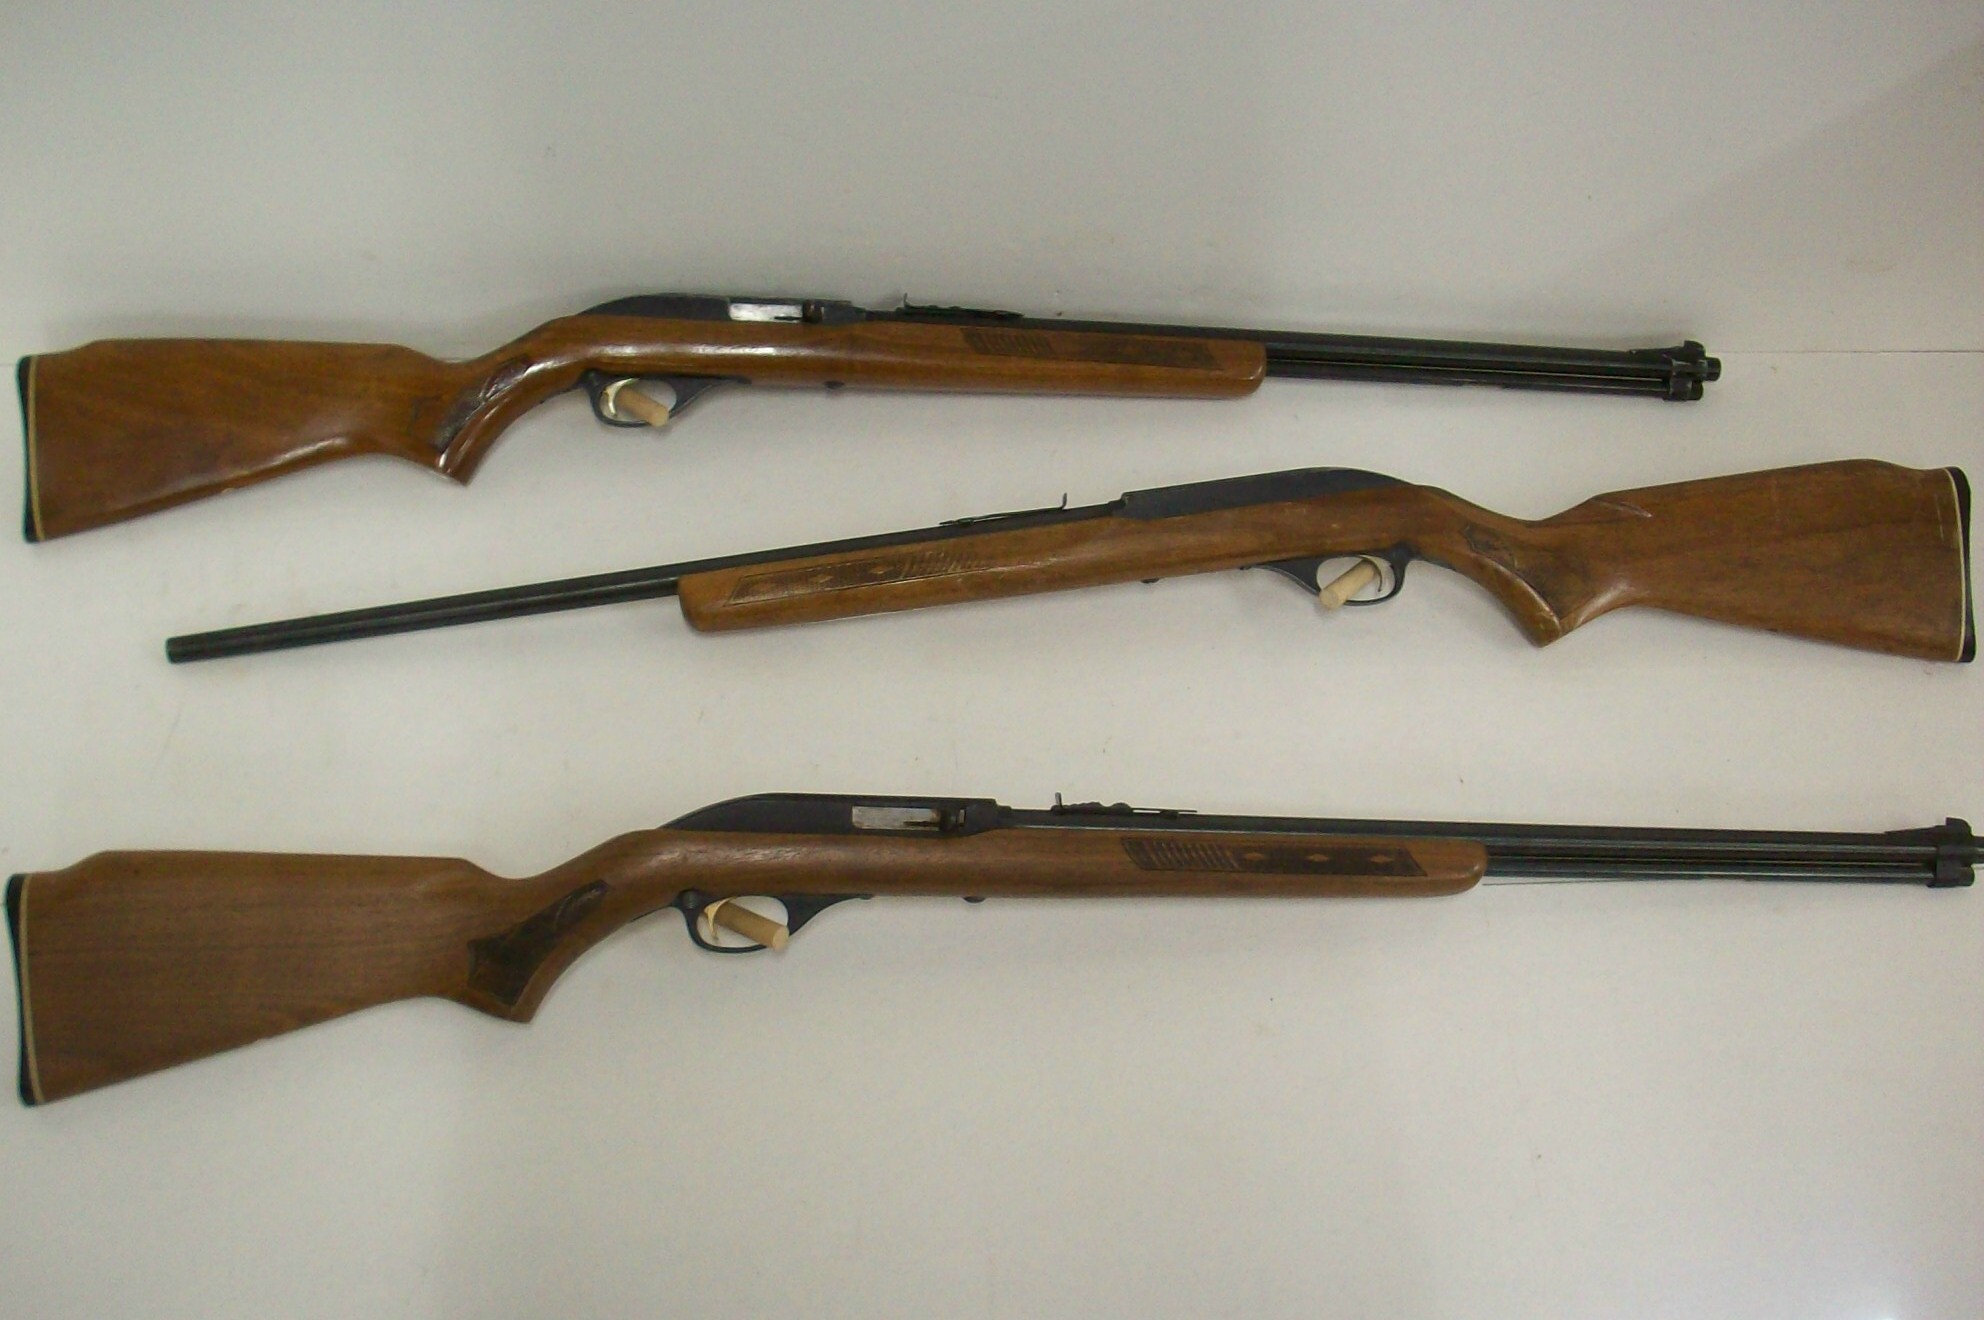 Marlin Model 99C Rimfire Rifle Parts